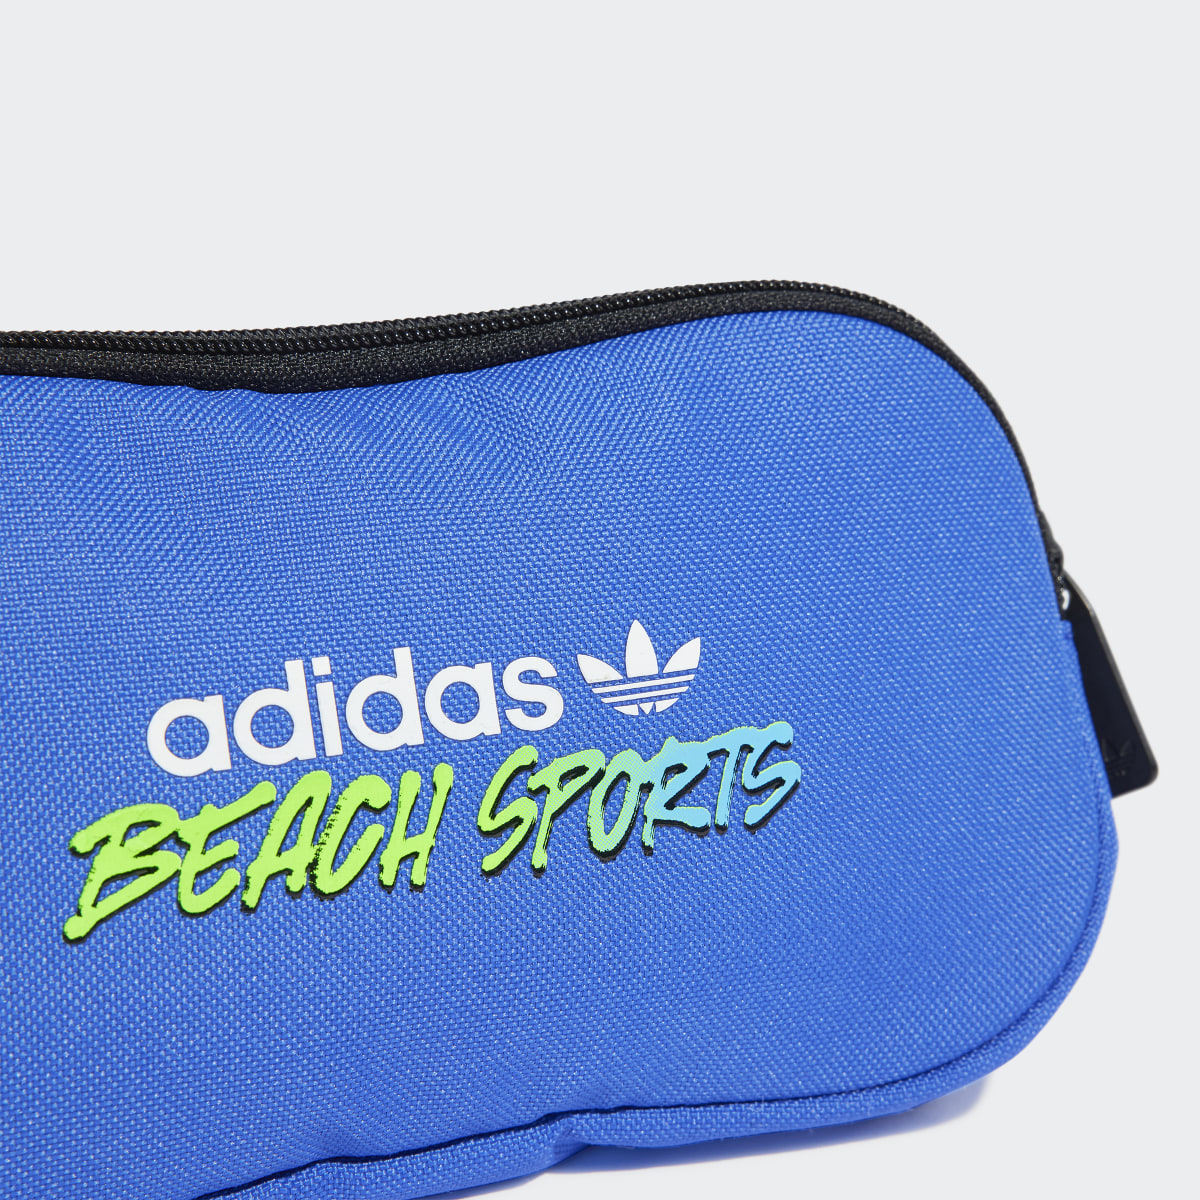 Adidas Bolsa de Cintura Beach Sports. 6